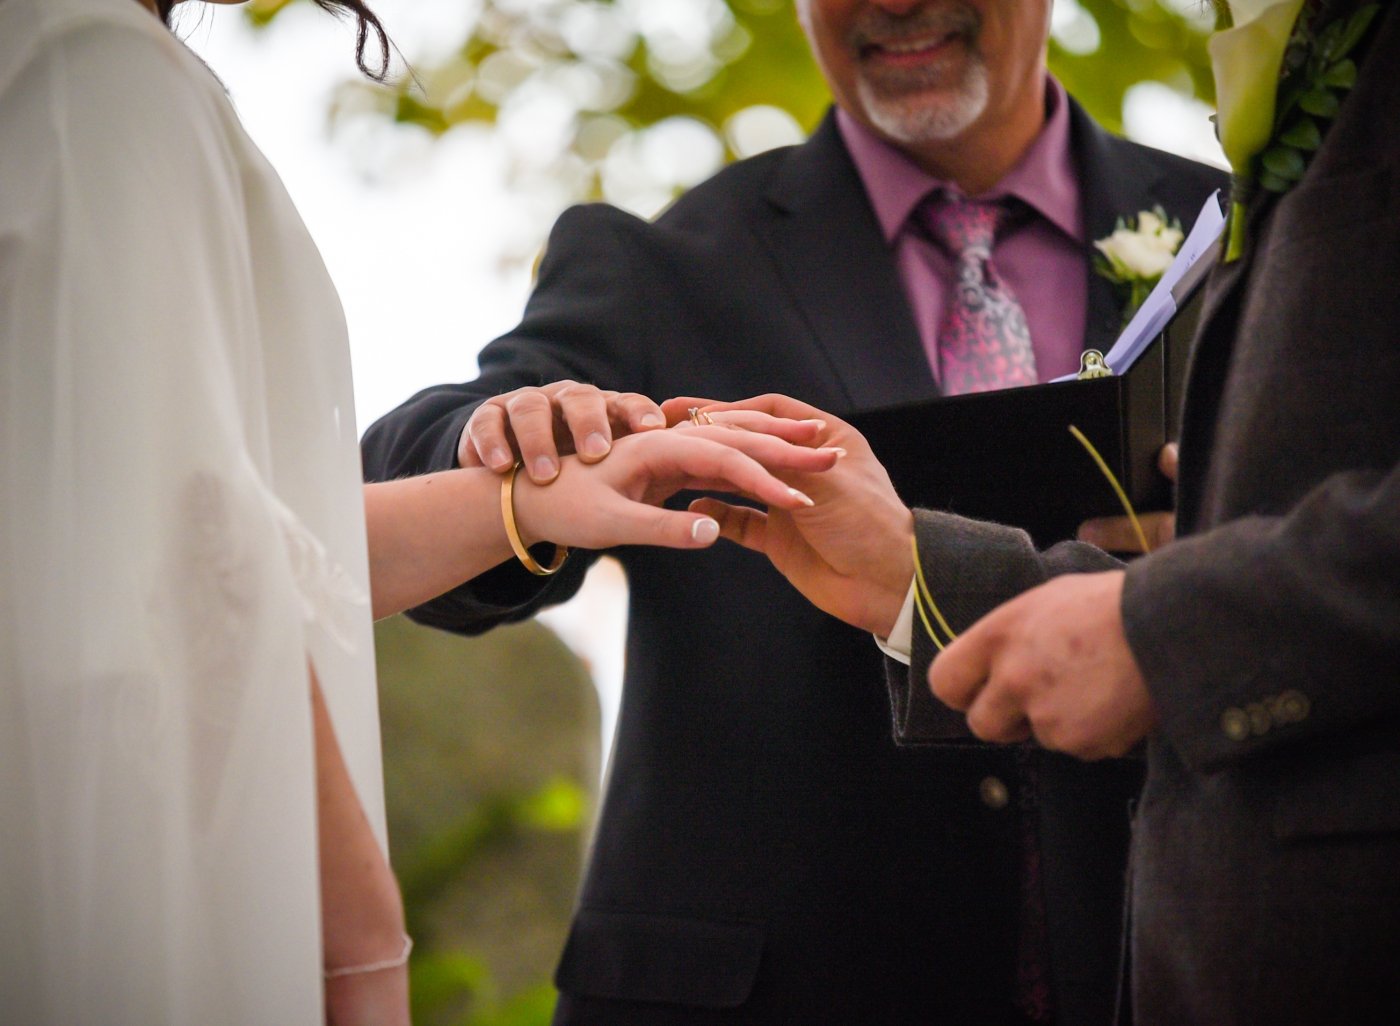 ring exchange at outdoor wedding